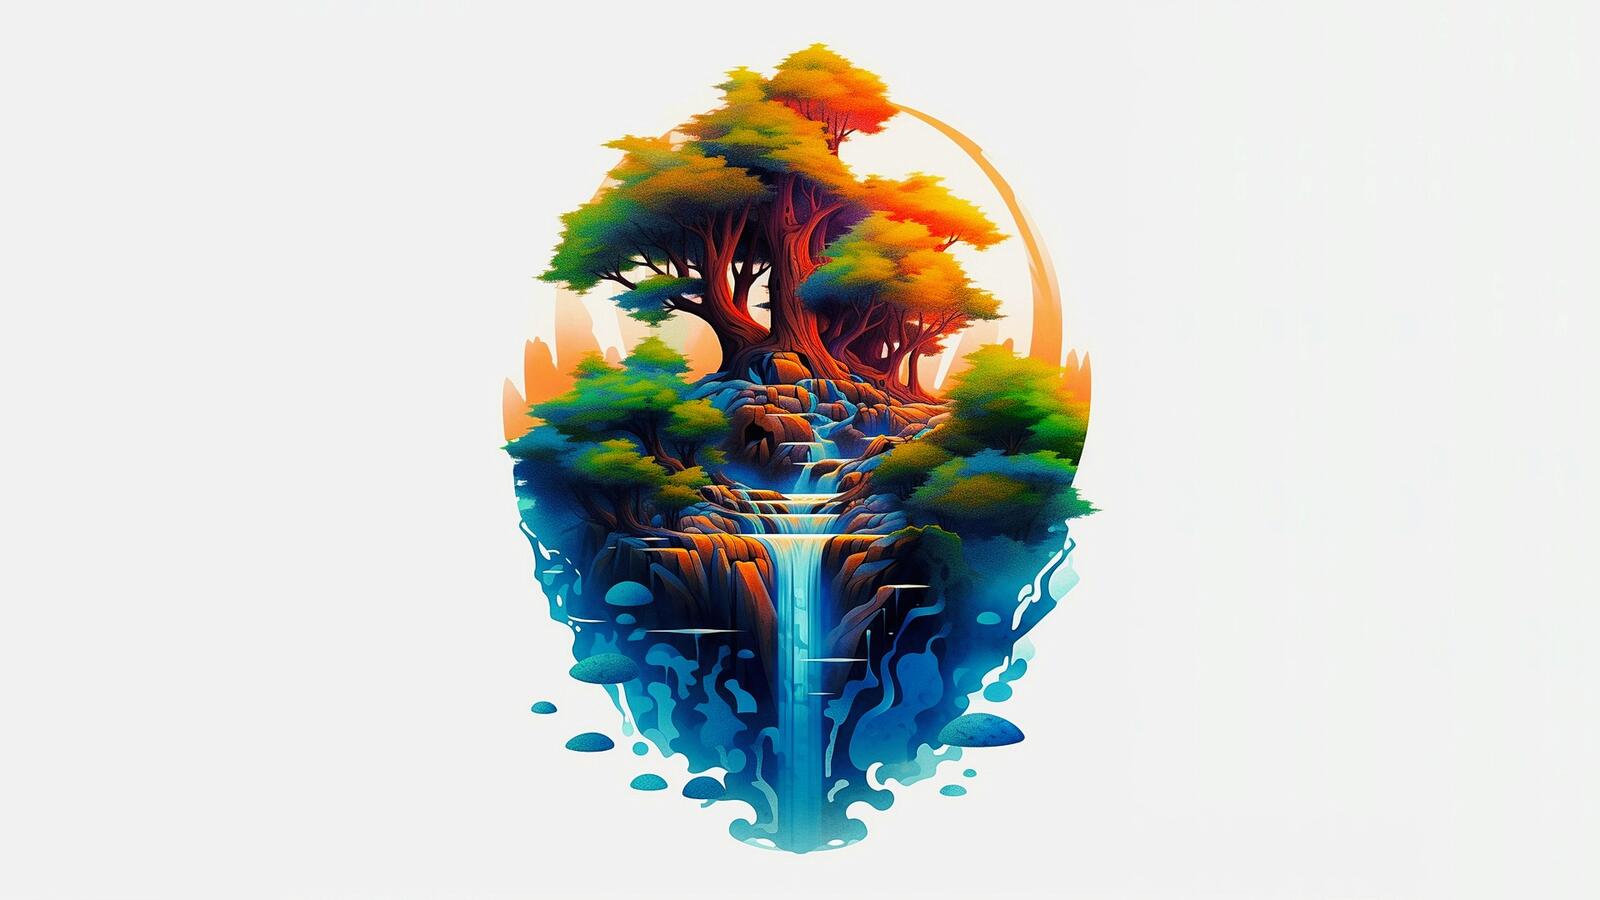 Бесплатное фото Рисунок водопада c деревьями на светлом фоне